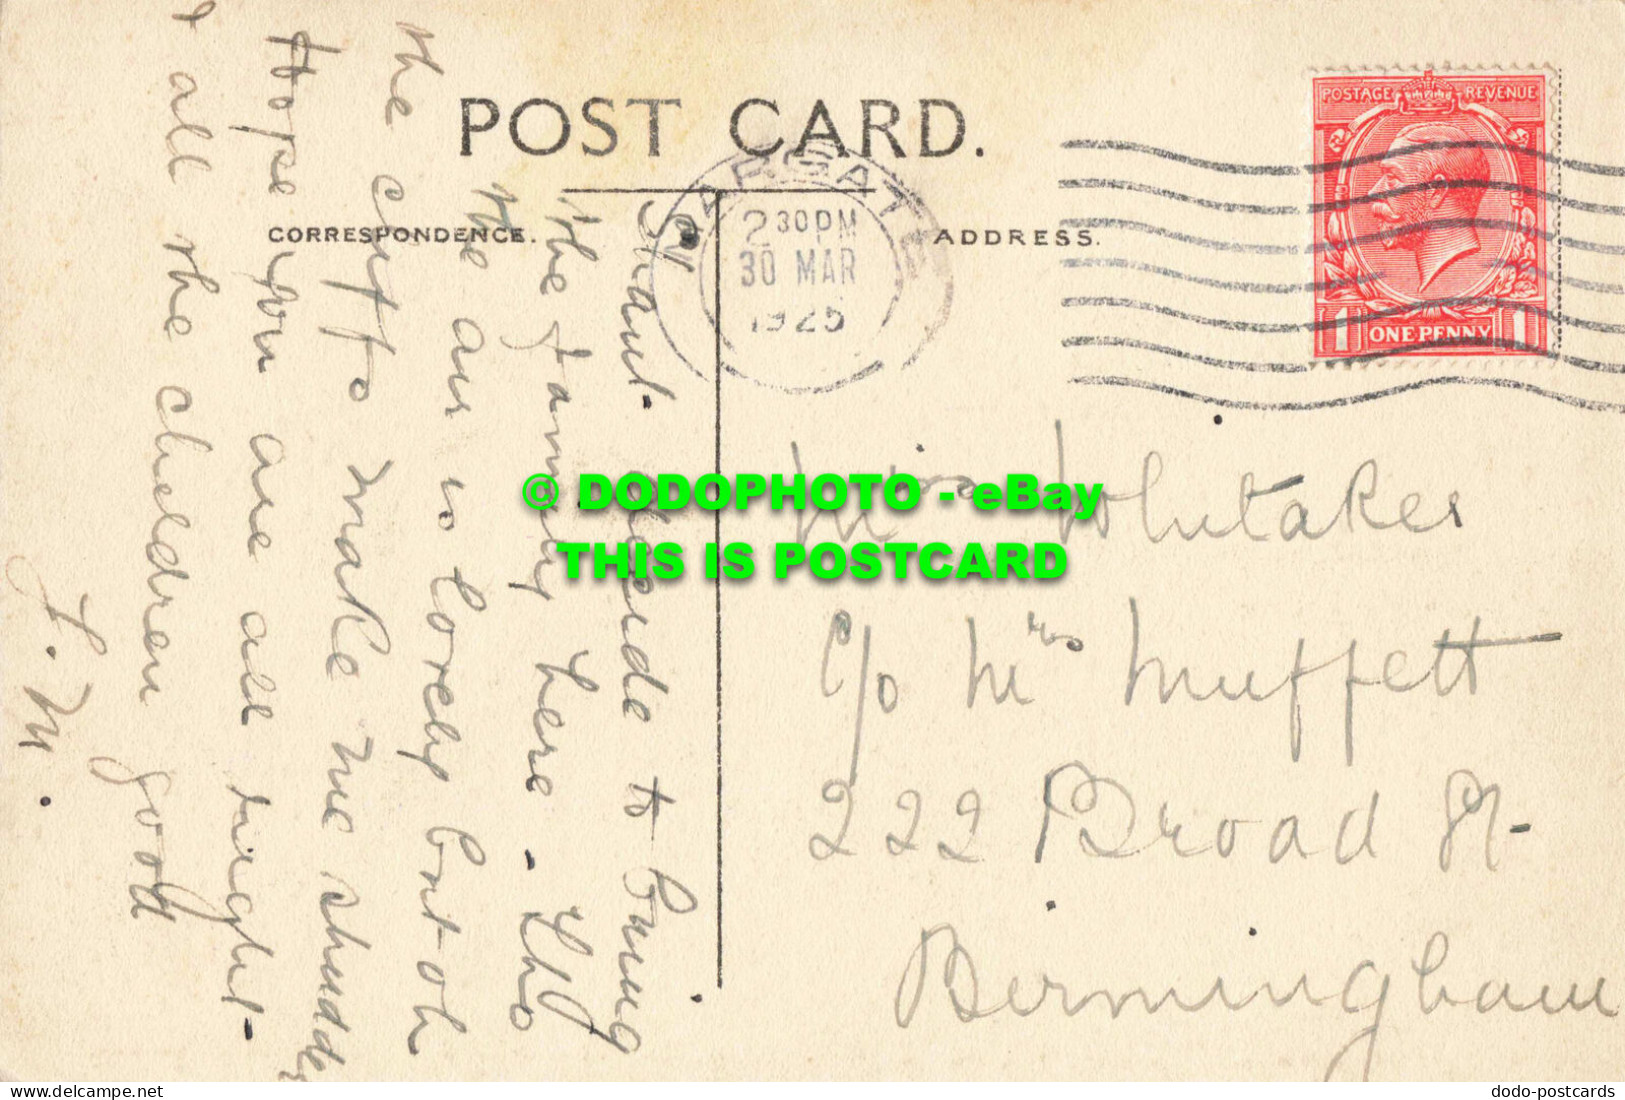 R559303 Cliftonville. Palm Bay Bathing. Postcard. 1925 - Monde